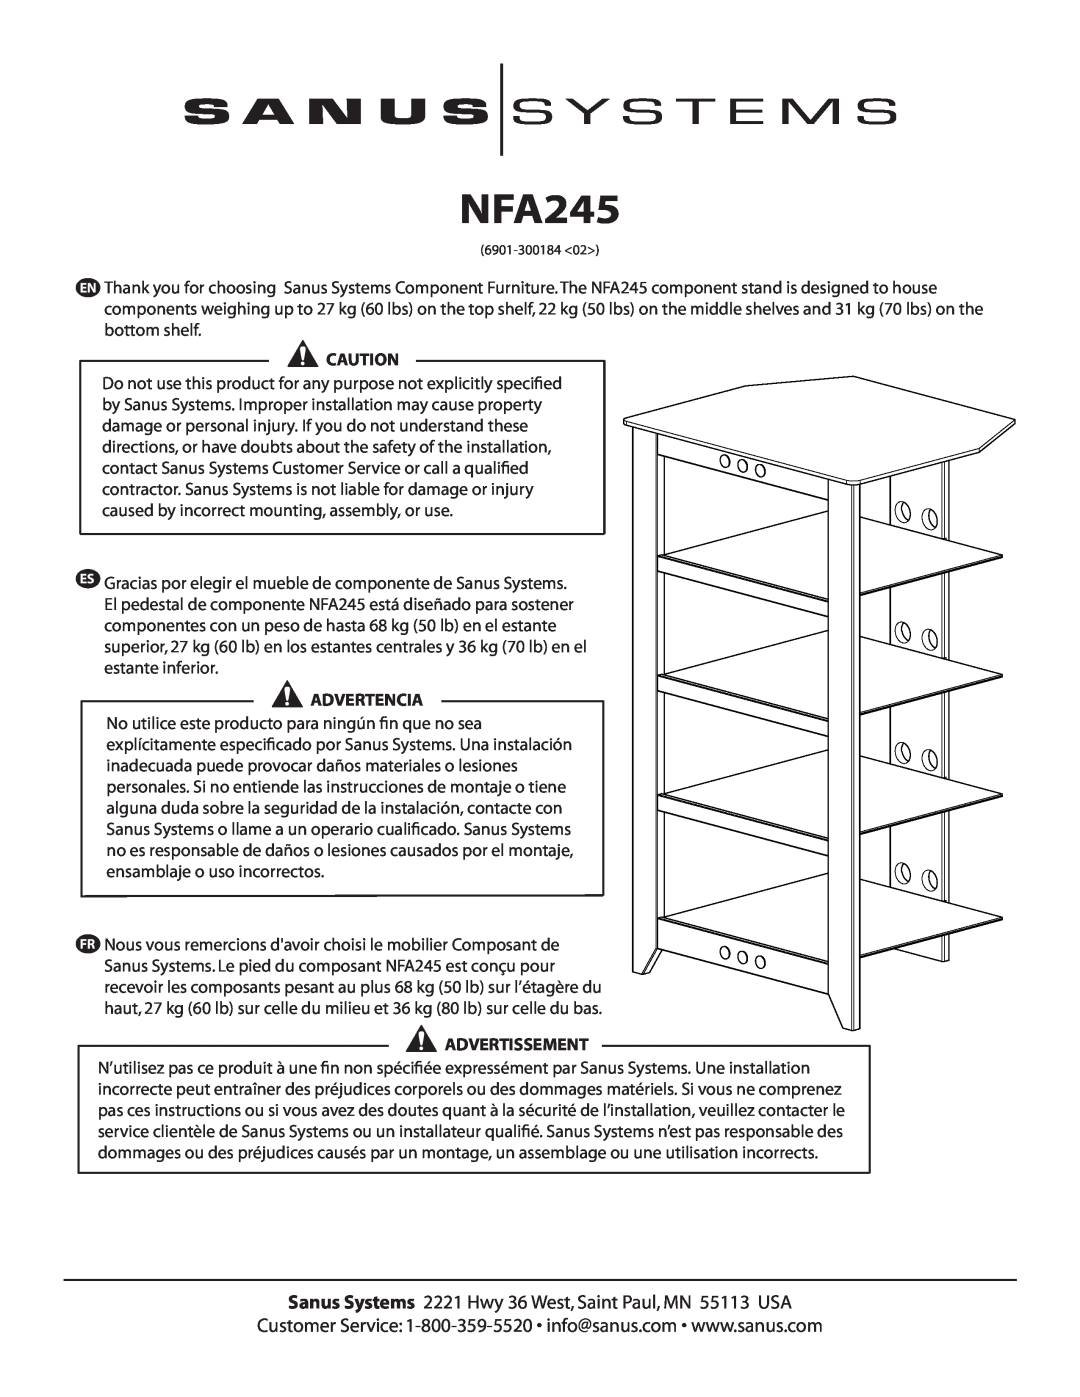 Sanus Systems NFA245 manual Advertencia, Advertissement 